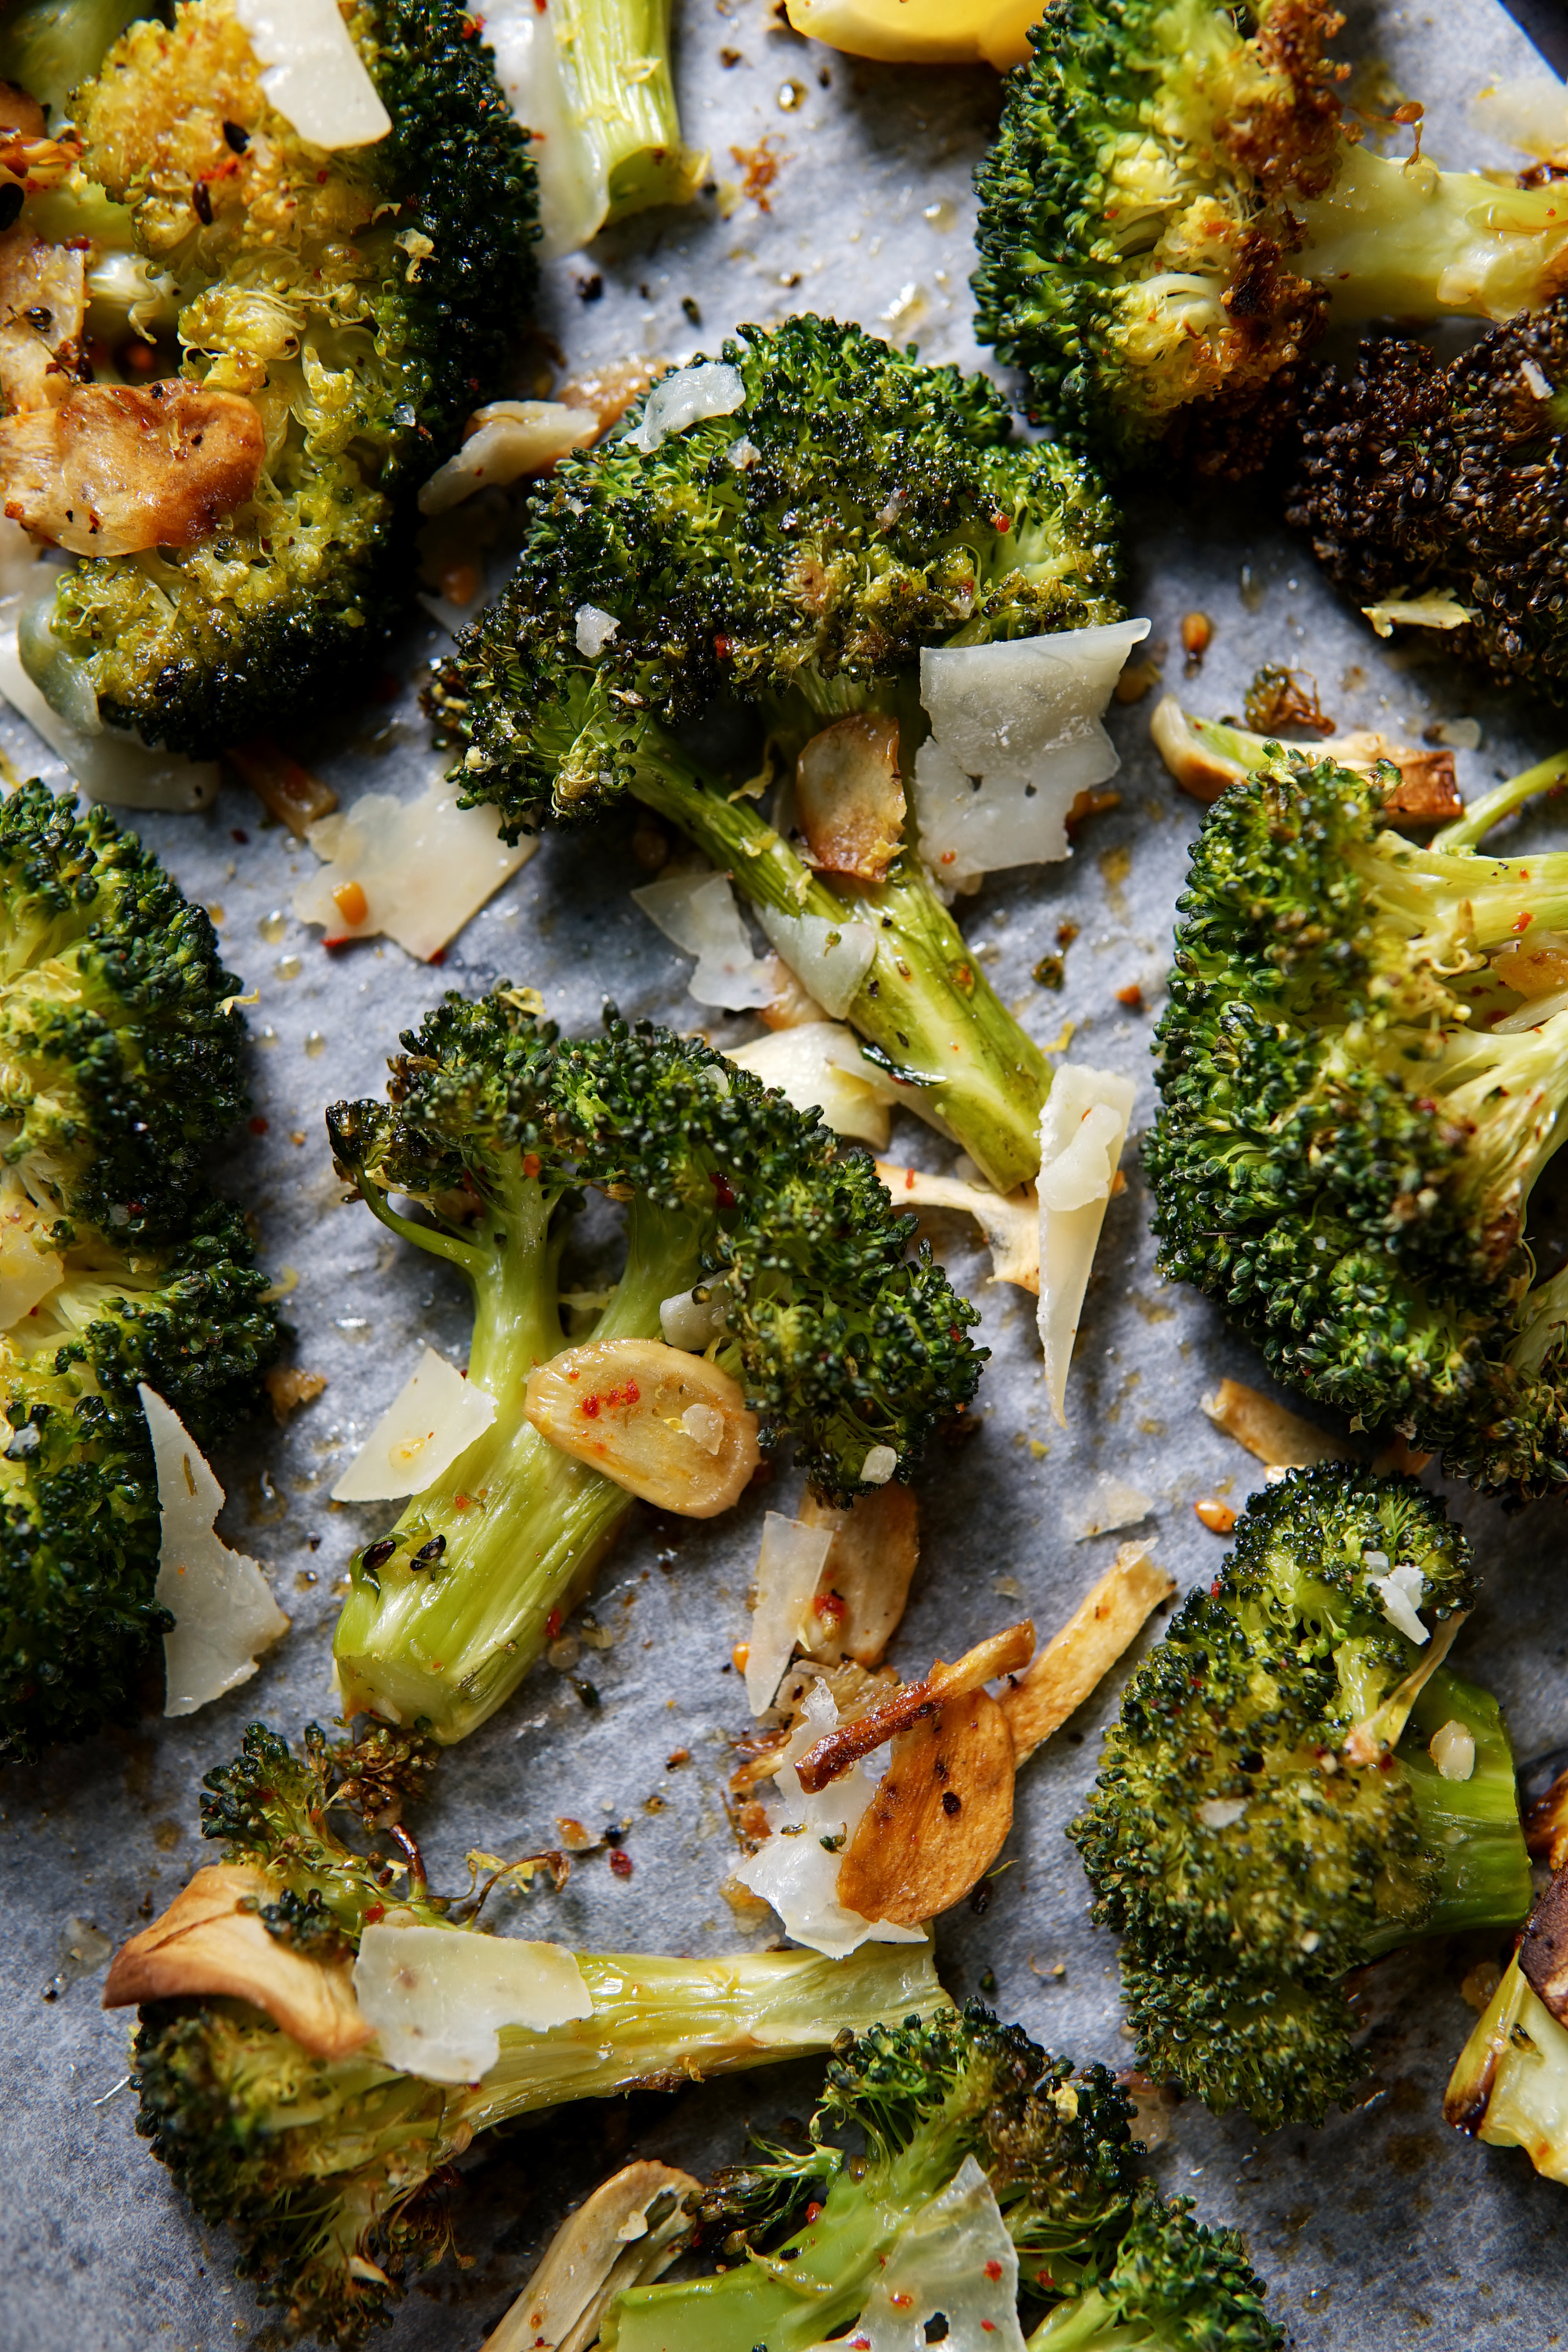  The Best Broccoli You'll Ever Eat   Crack Broccoli     Recipe  